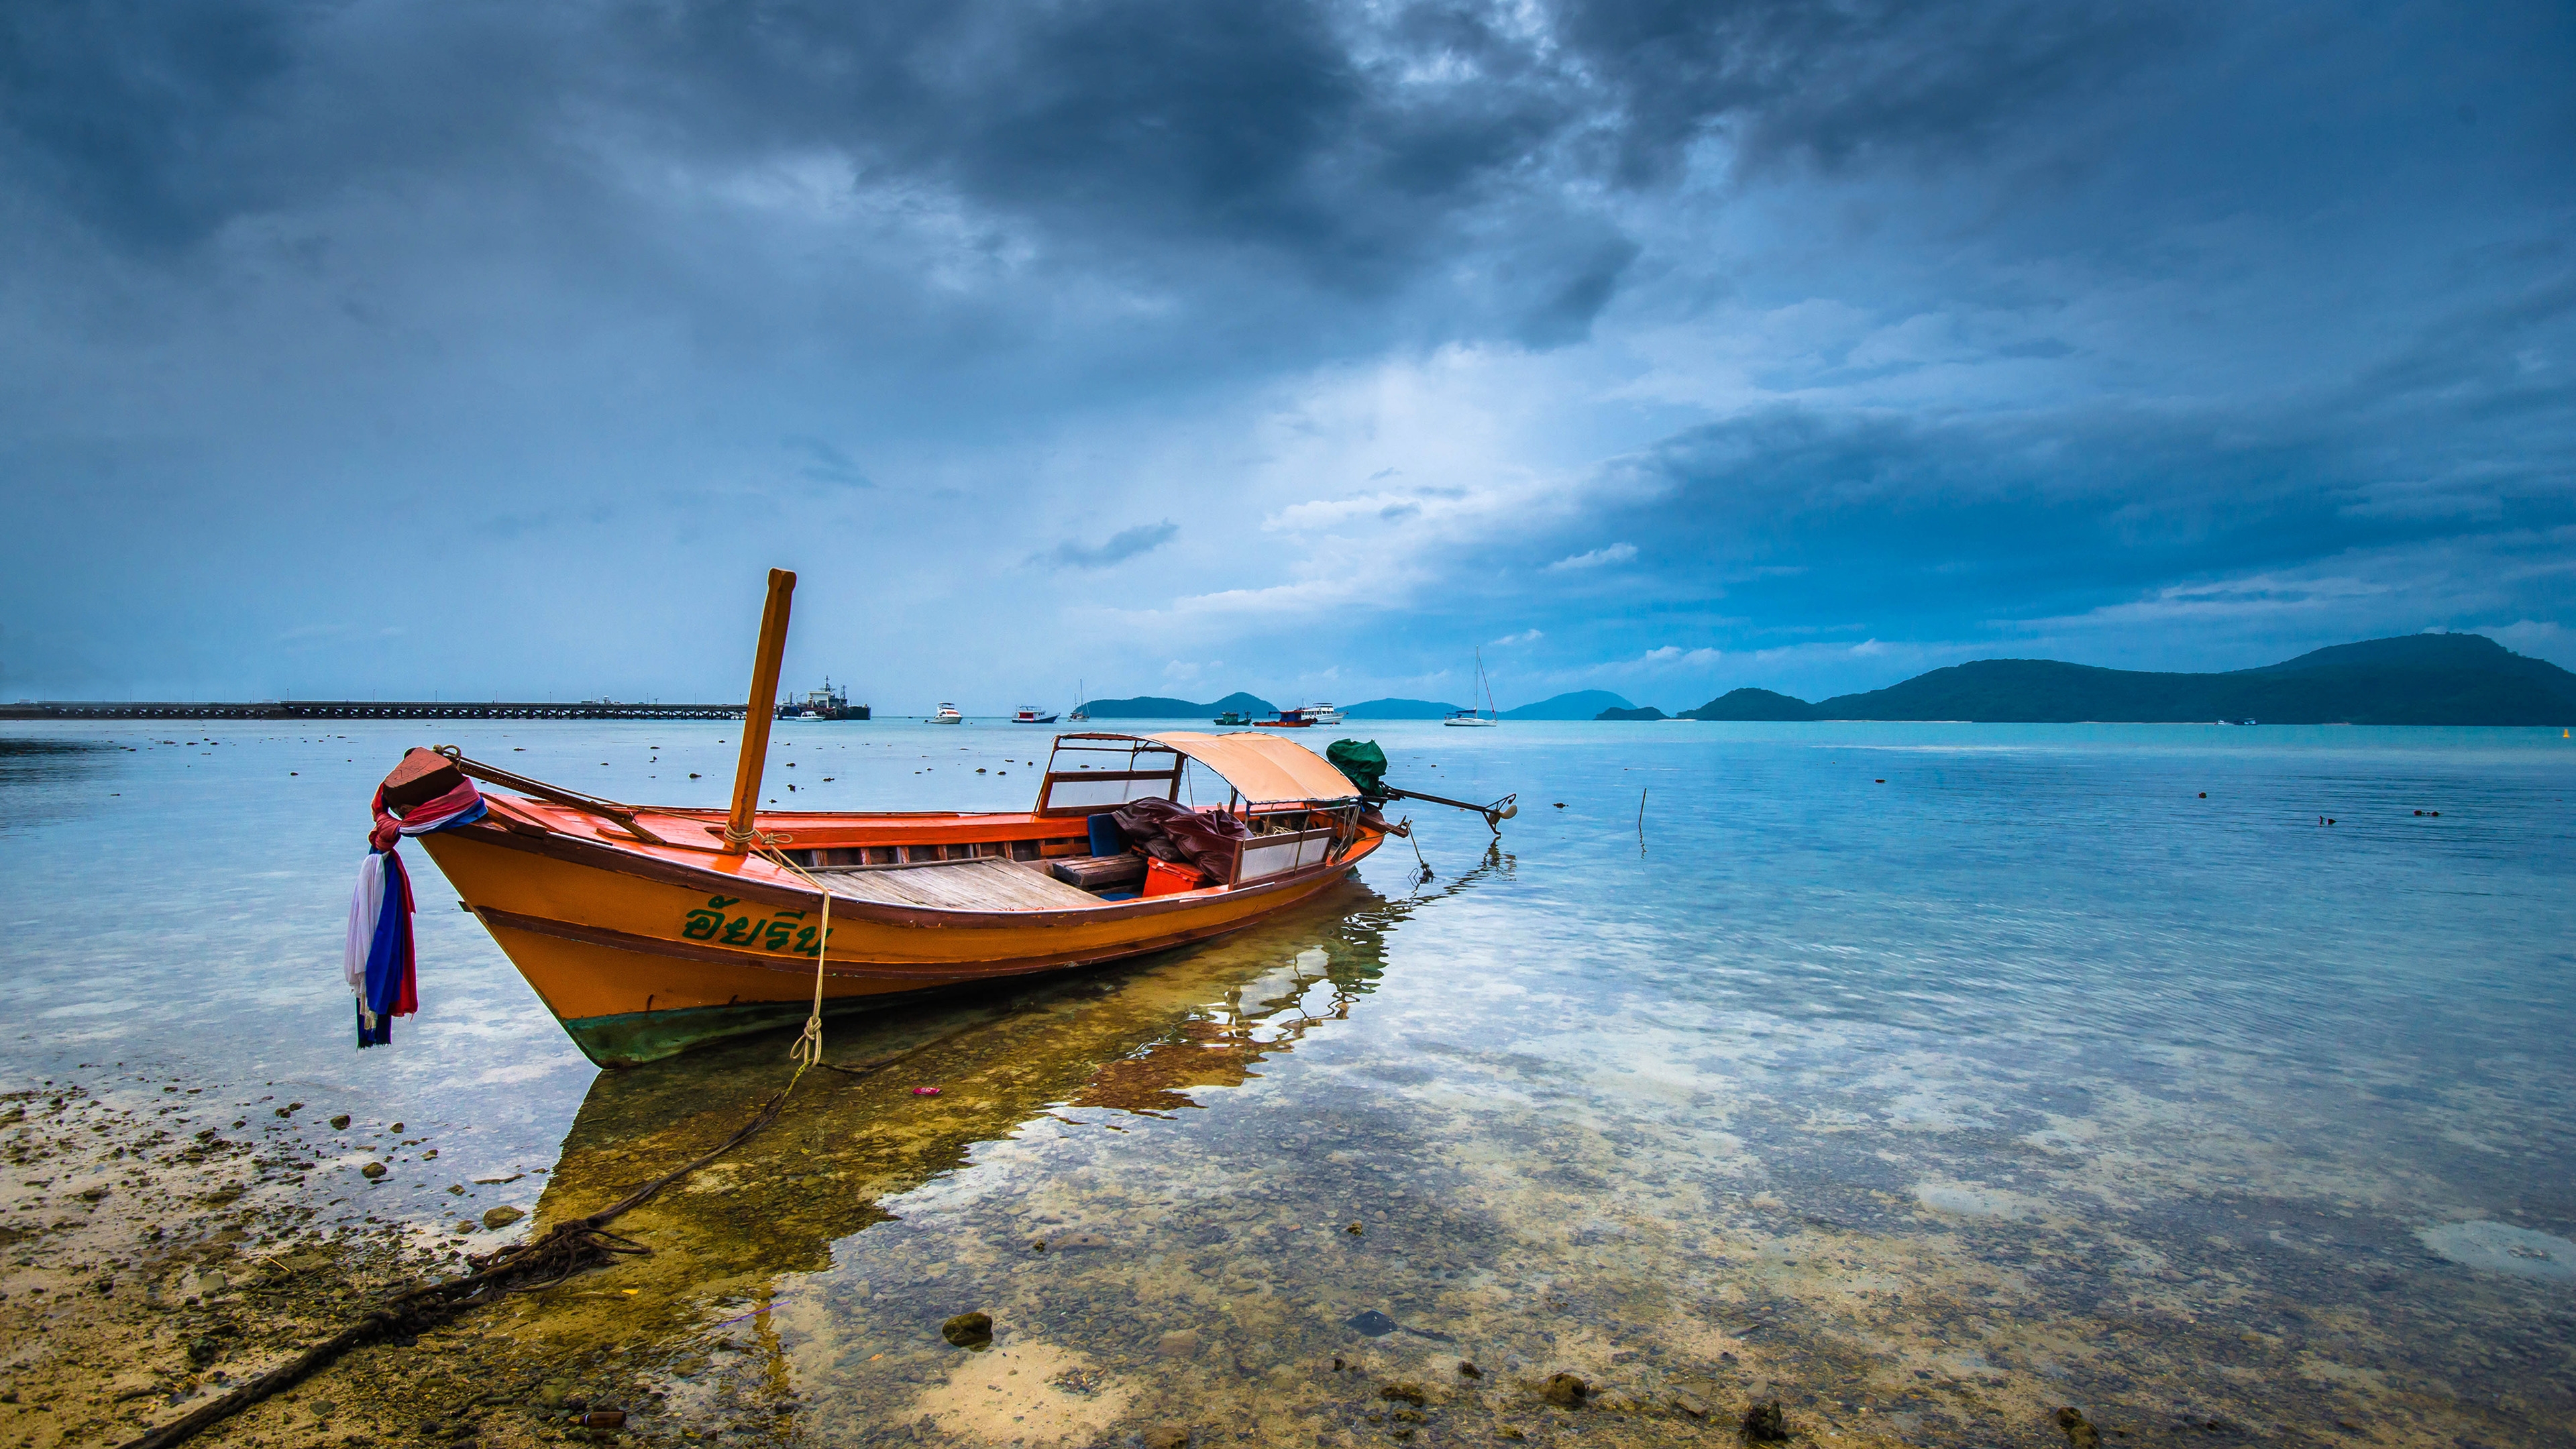 Oceanfront Phuket Thailand for 3840 x 2160 Ultra HD resolution